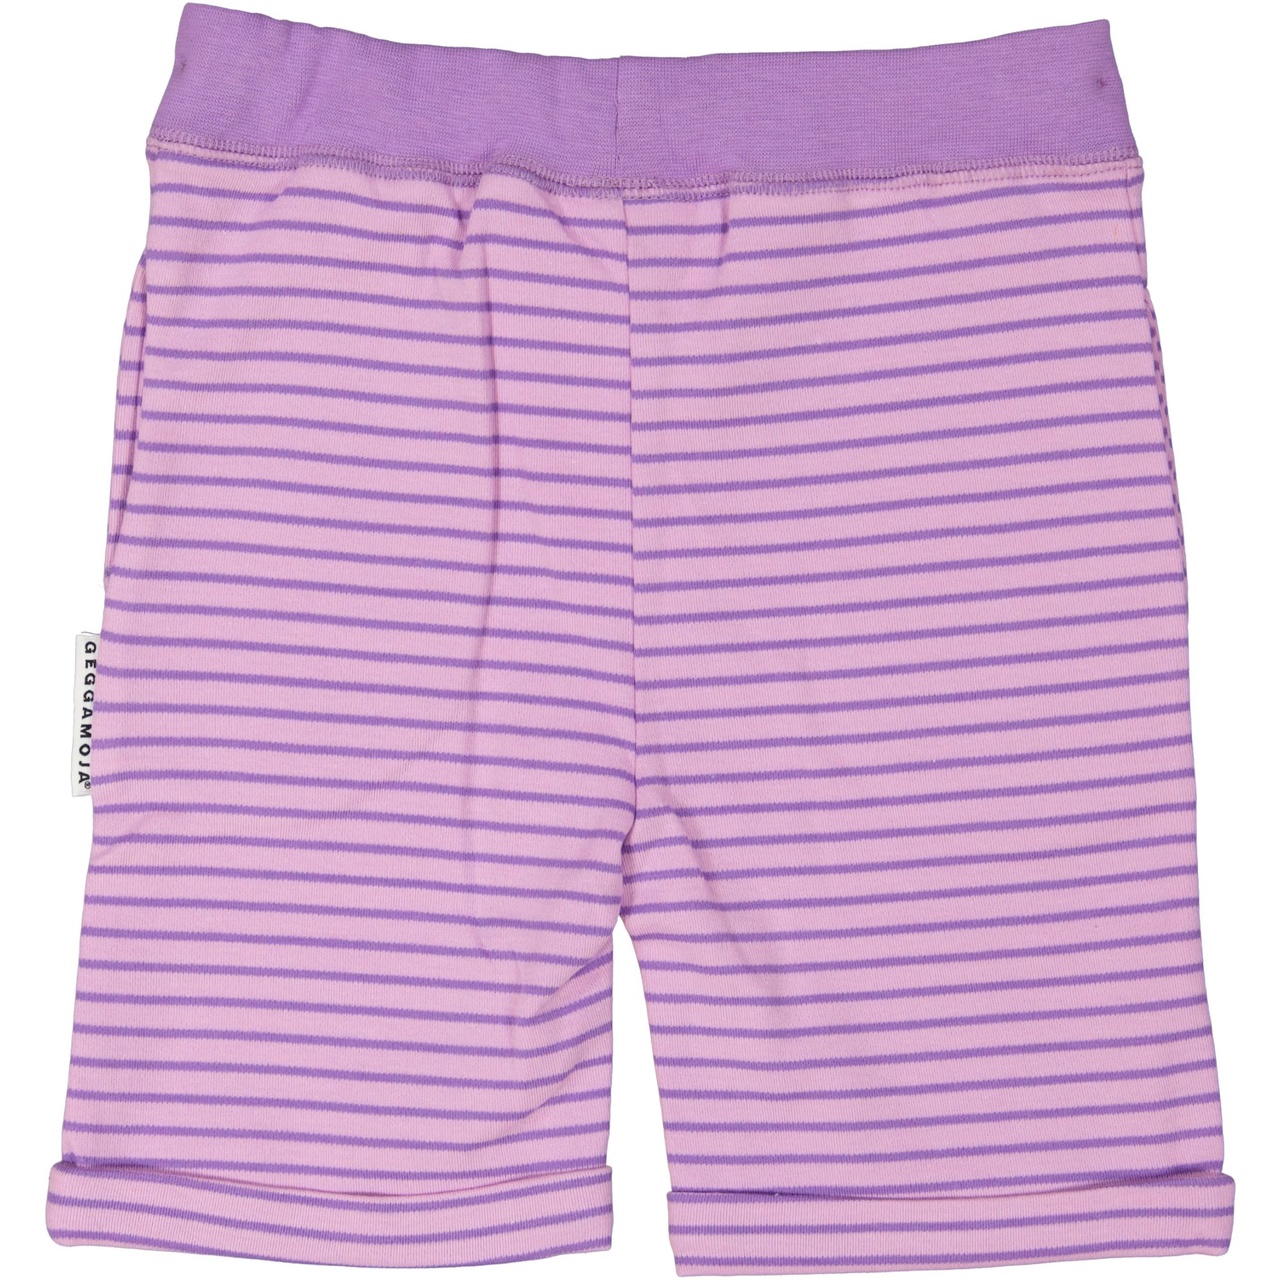 Shorts L.purple/purple  74/80